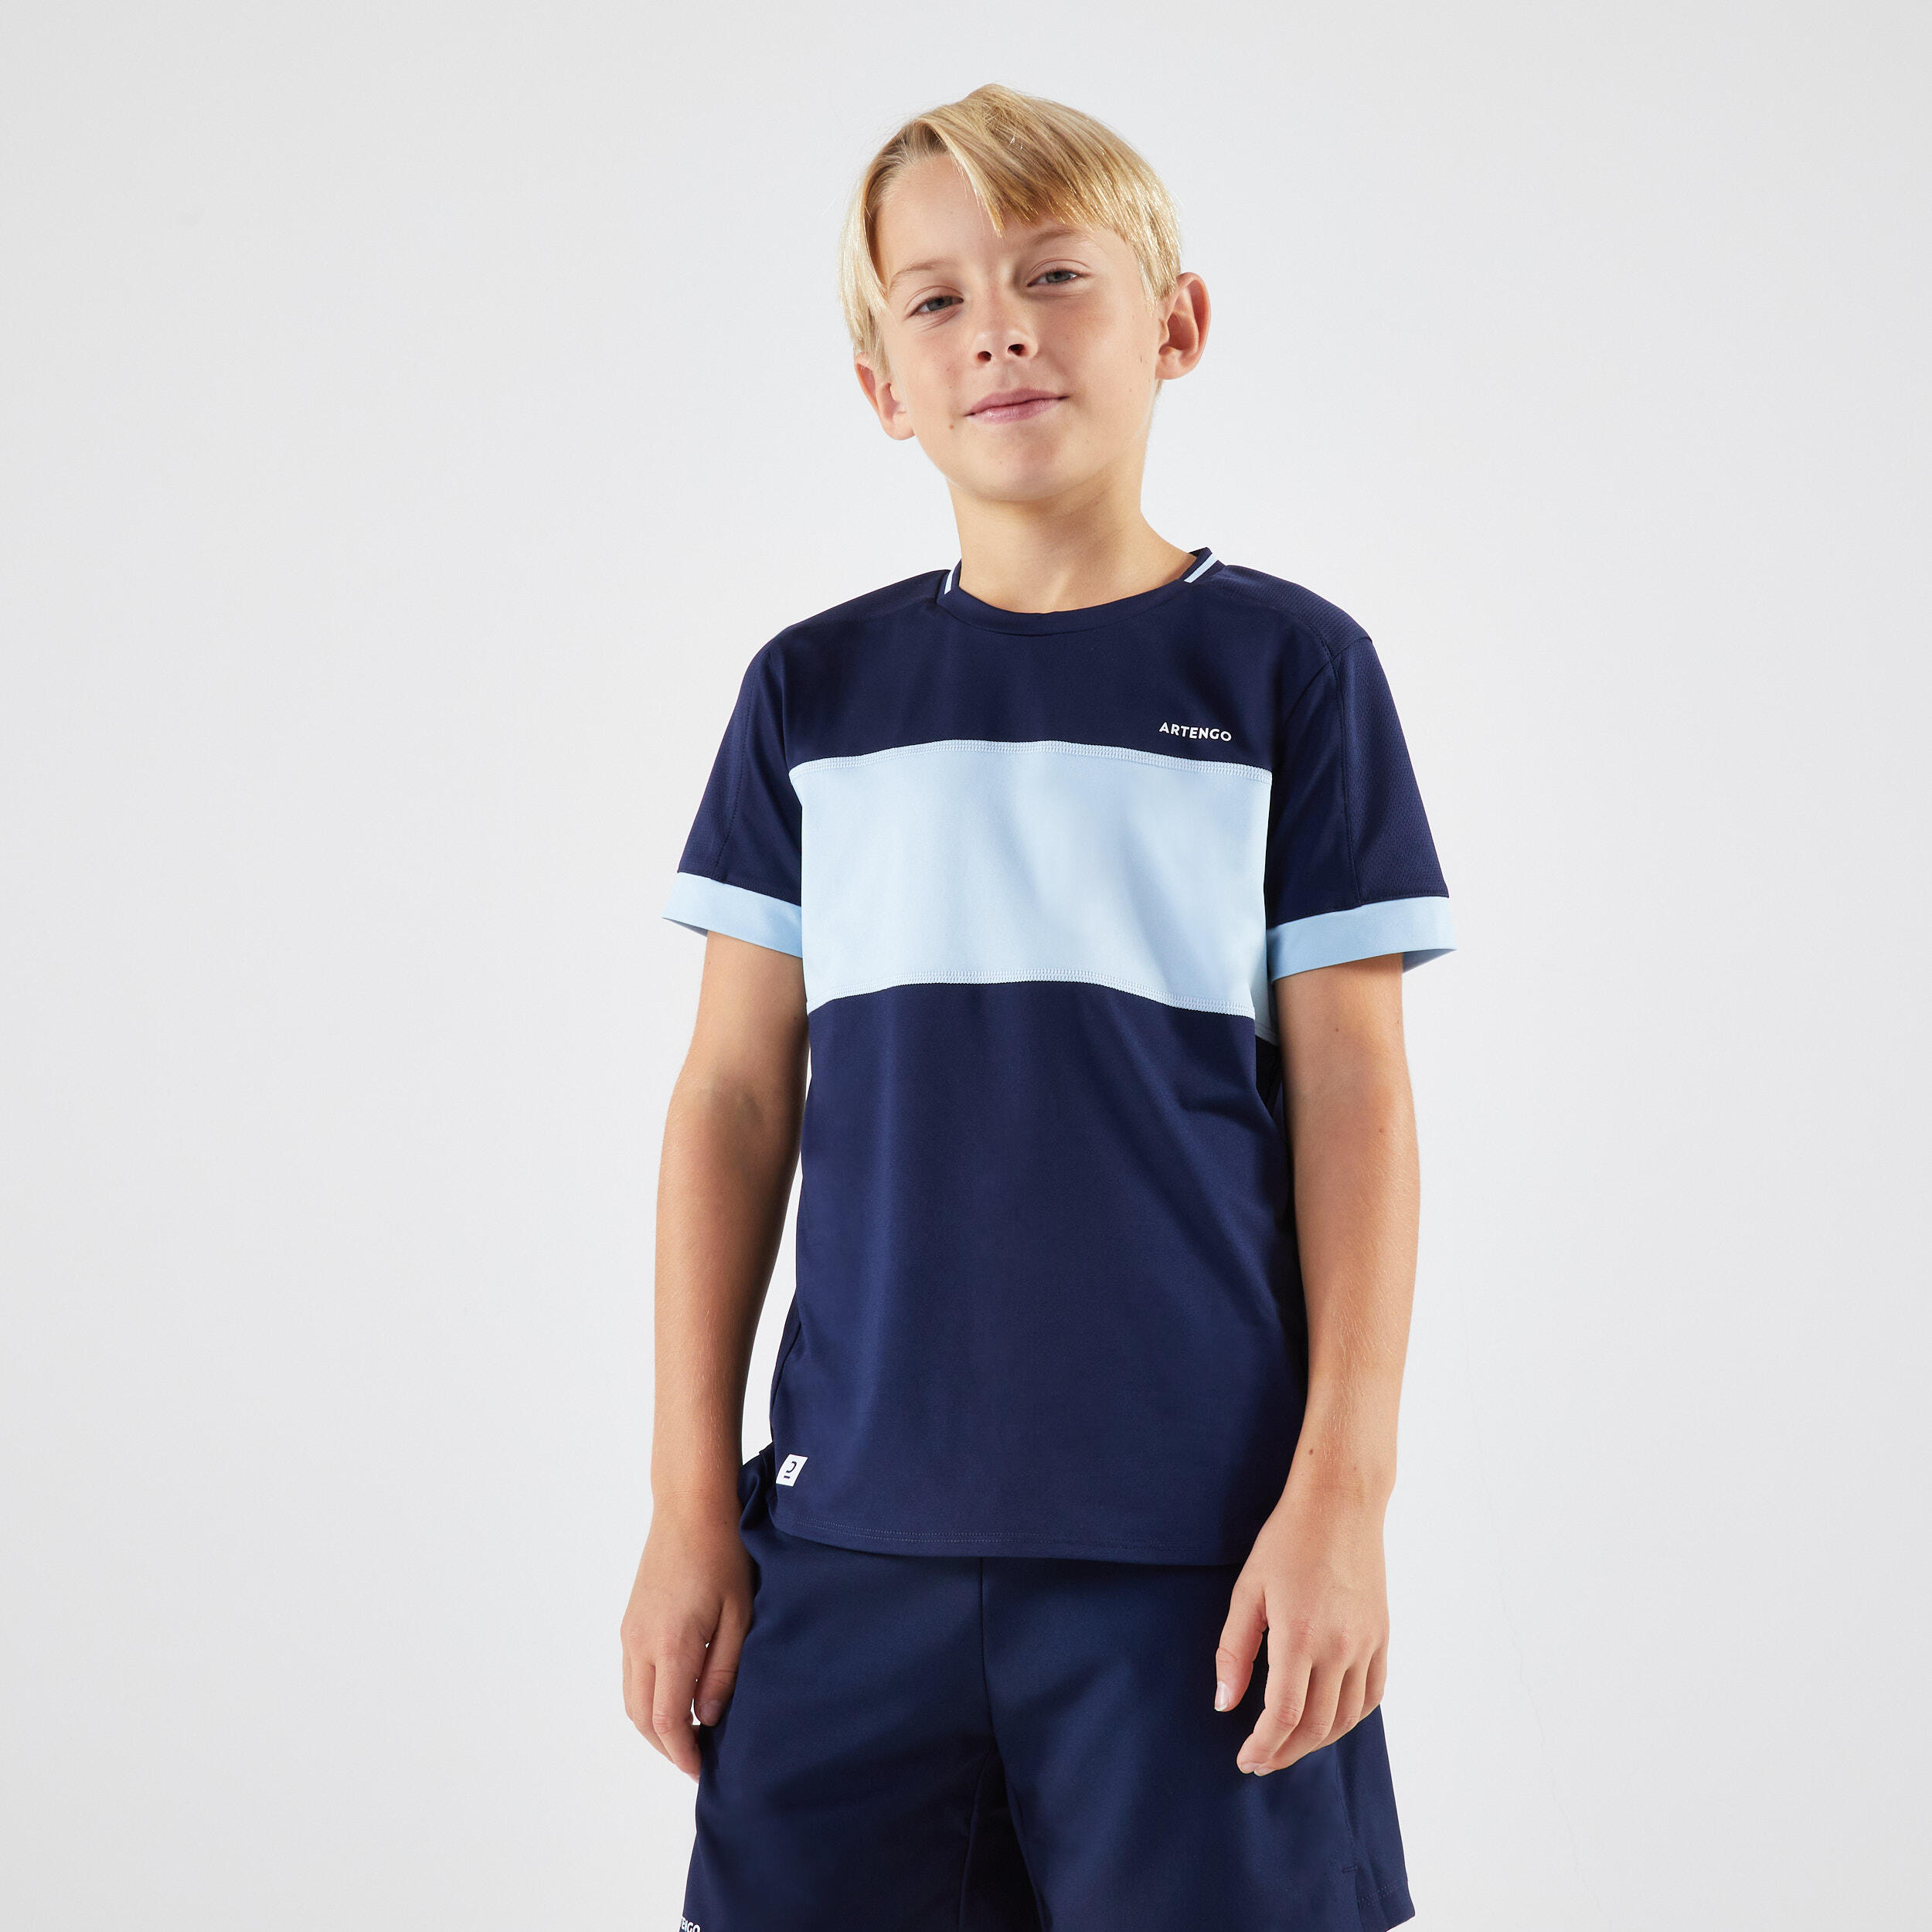 Decathlon | T-shirt tennis bambino DRY blu |  Artengo